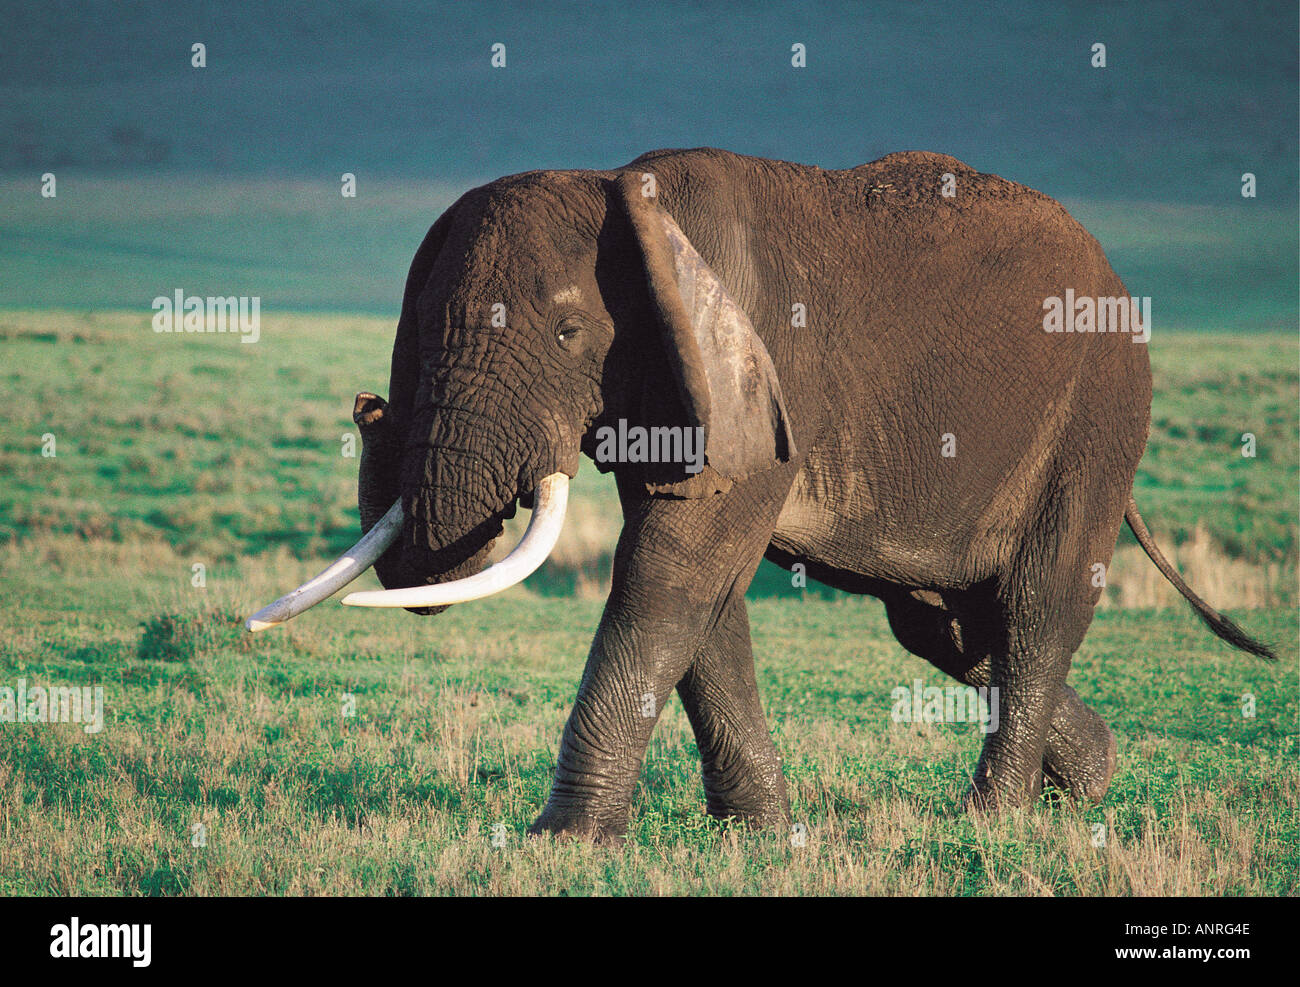 Old male elephant with floppy ears Ngorongoro Crater Tanzania East Africa Stock Photo